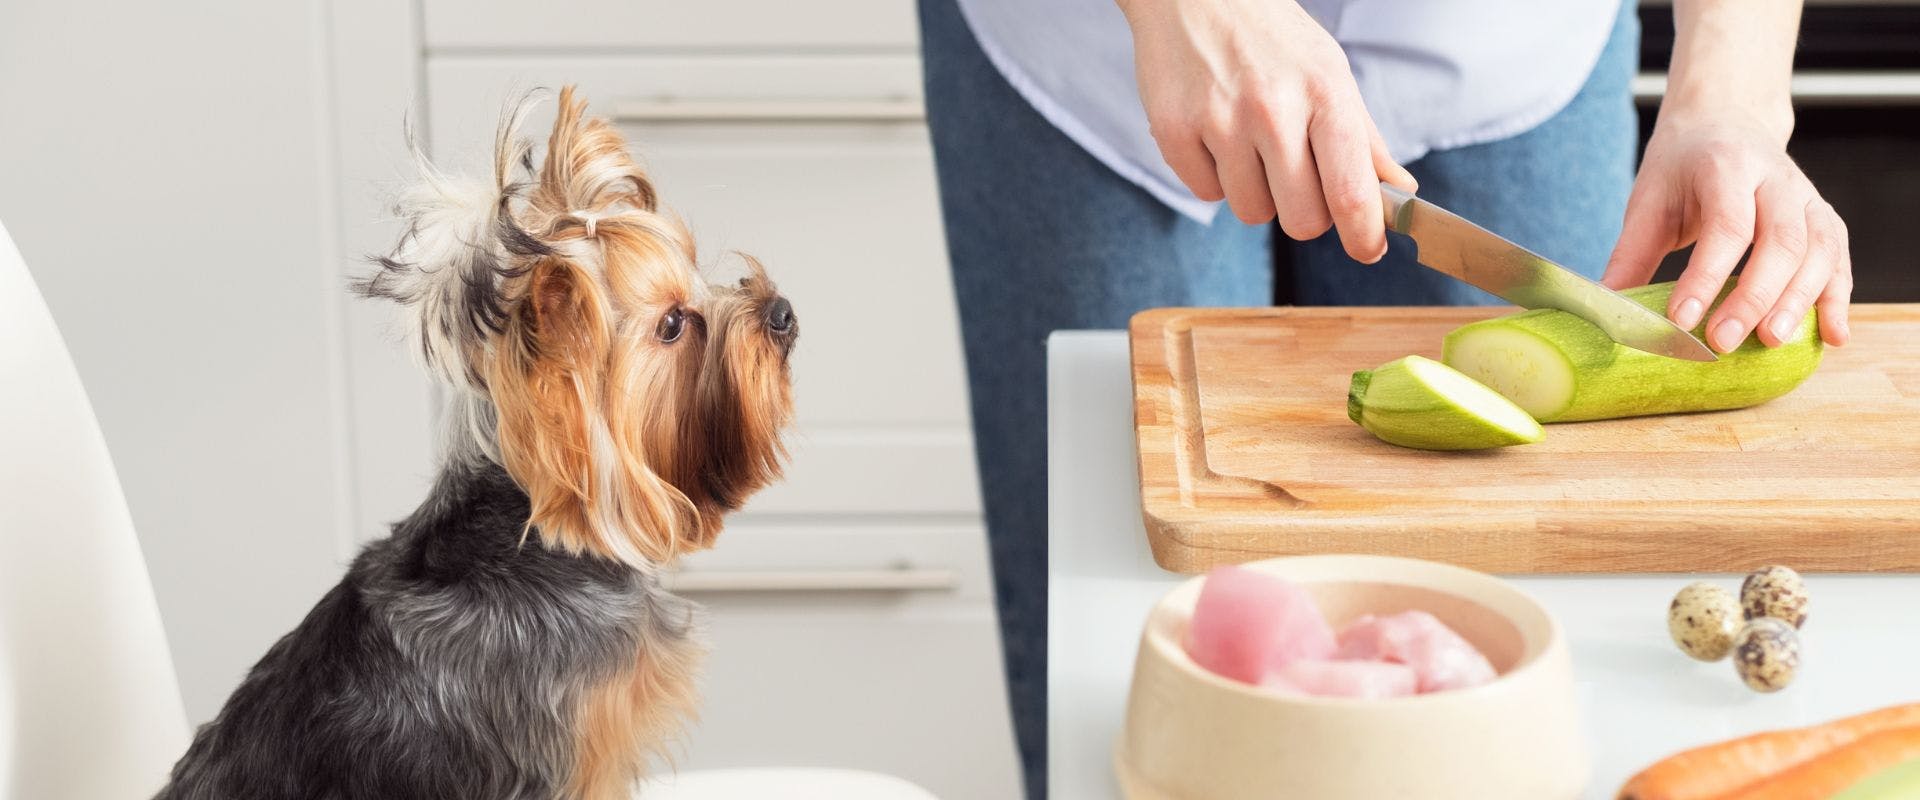 Dog watching someone slice a zucchini